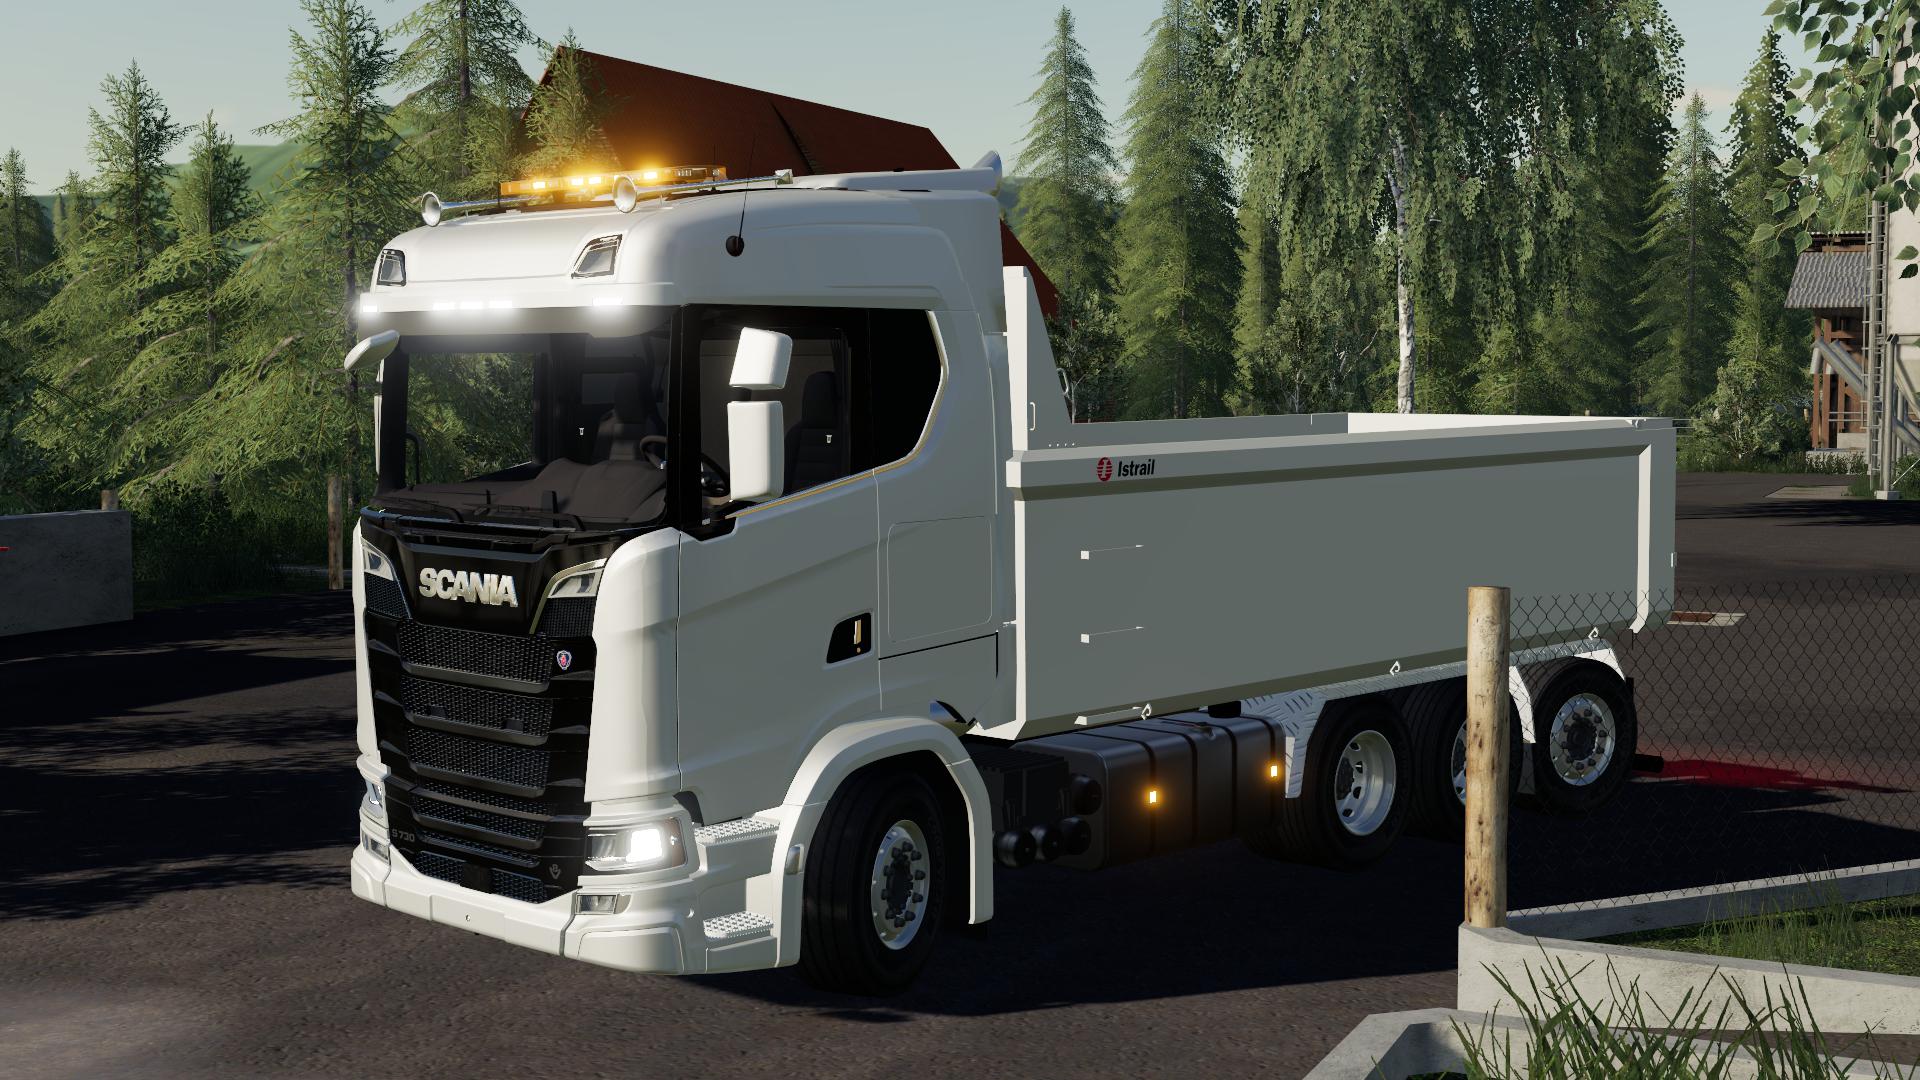 Scania S730 Truck V1 0 0 1 Ls22 Farming Simulator 22 Mod Ls22 Mod 3878